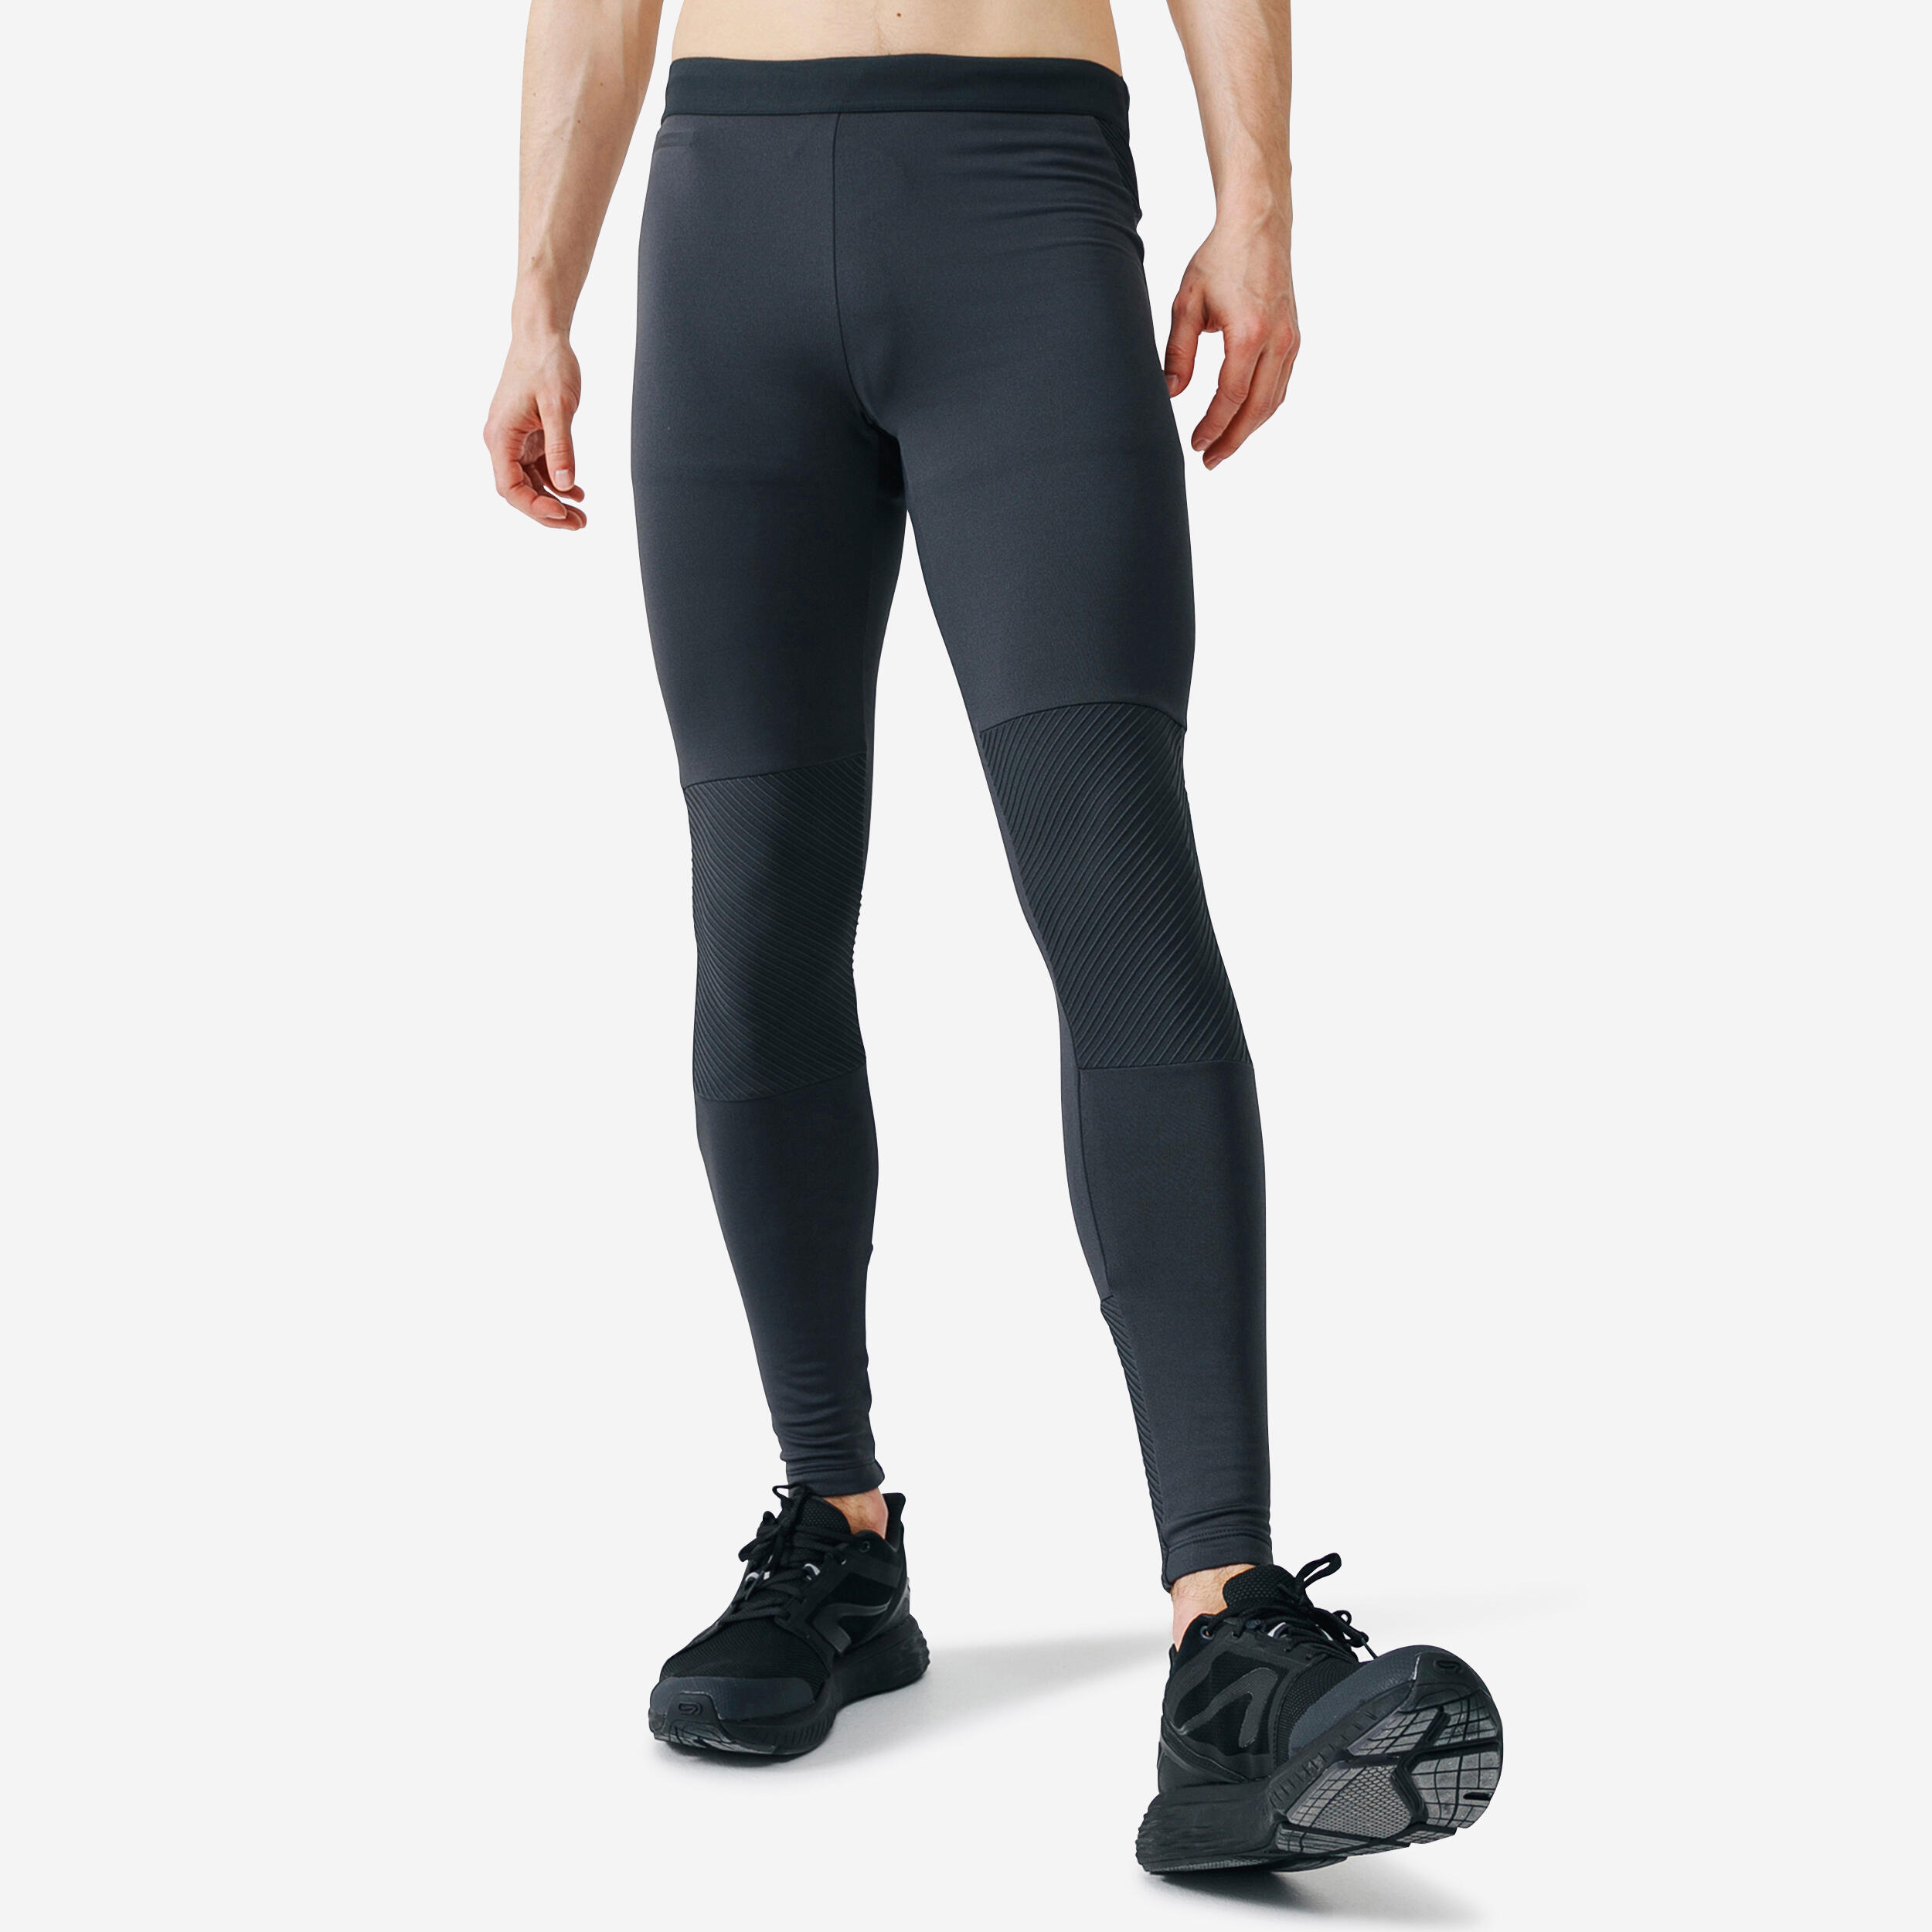 Men's warm running tights - Warm + - Grey 1/6